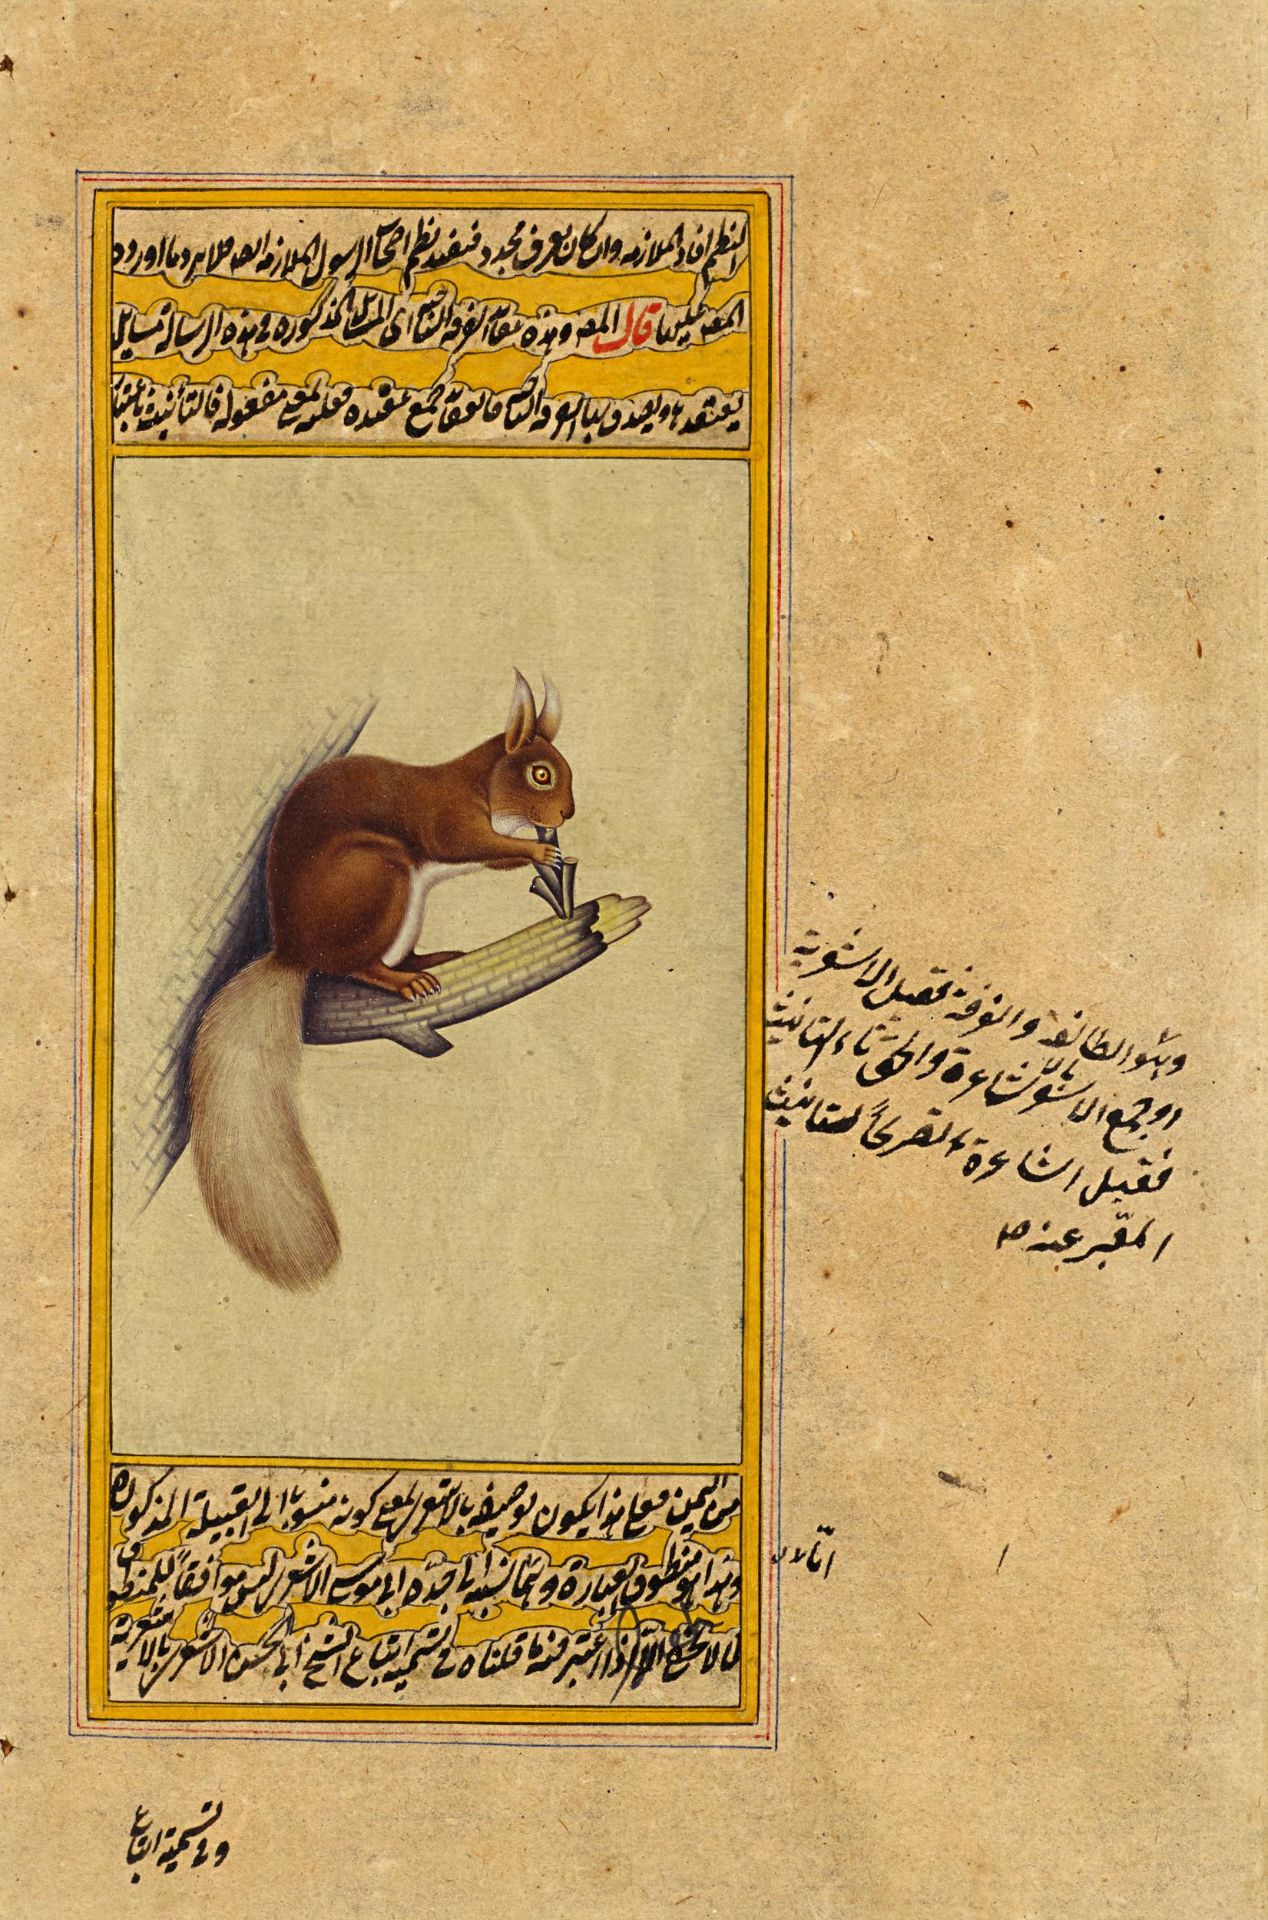 TWO MANUSCRIPT ILLUSTRATIONS OF DUCKS AND SQUIRREL. Indo Persian. 19th-20th c. Pigments on paper. - Bild 3 aus 3